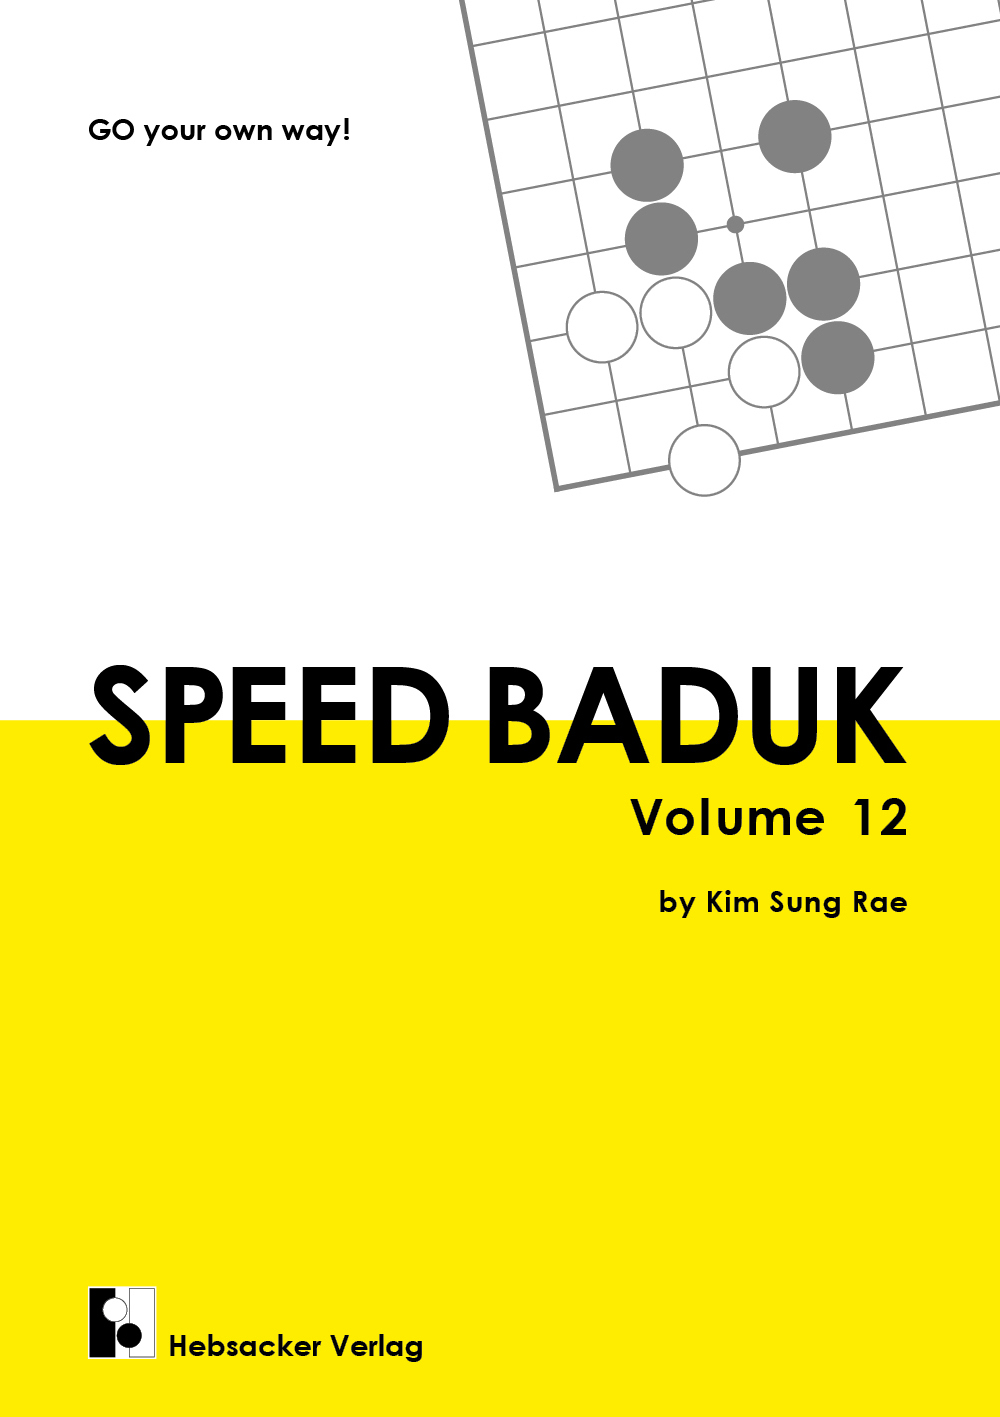 Speed baduk vol 12